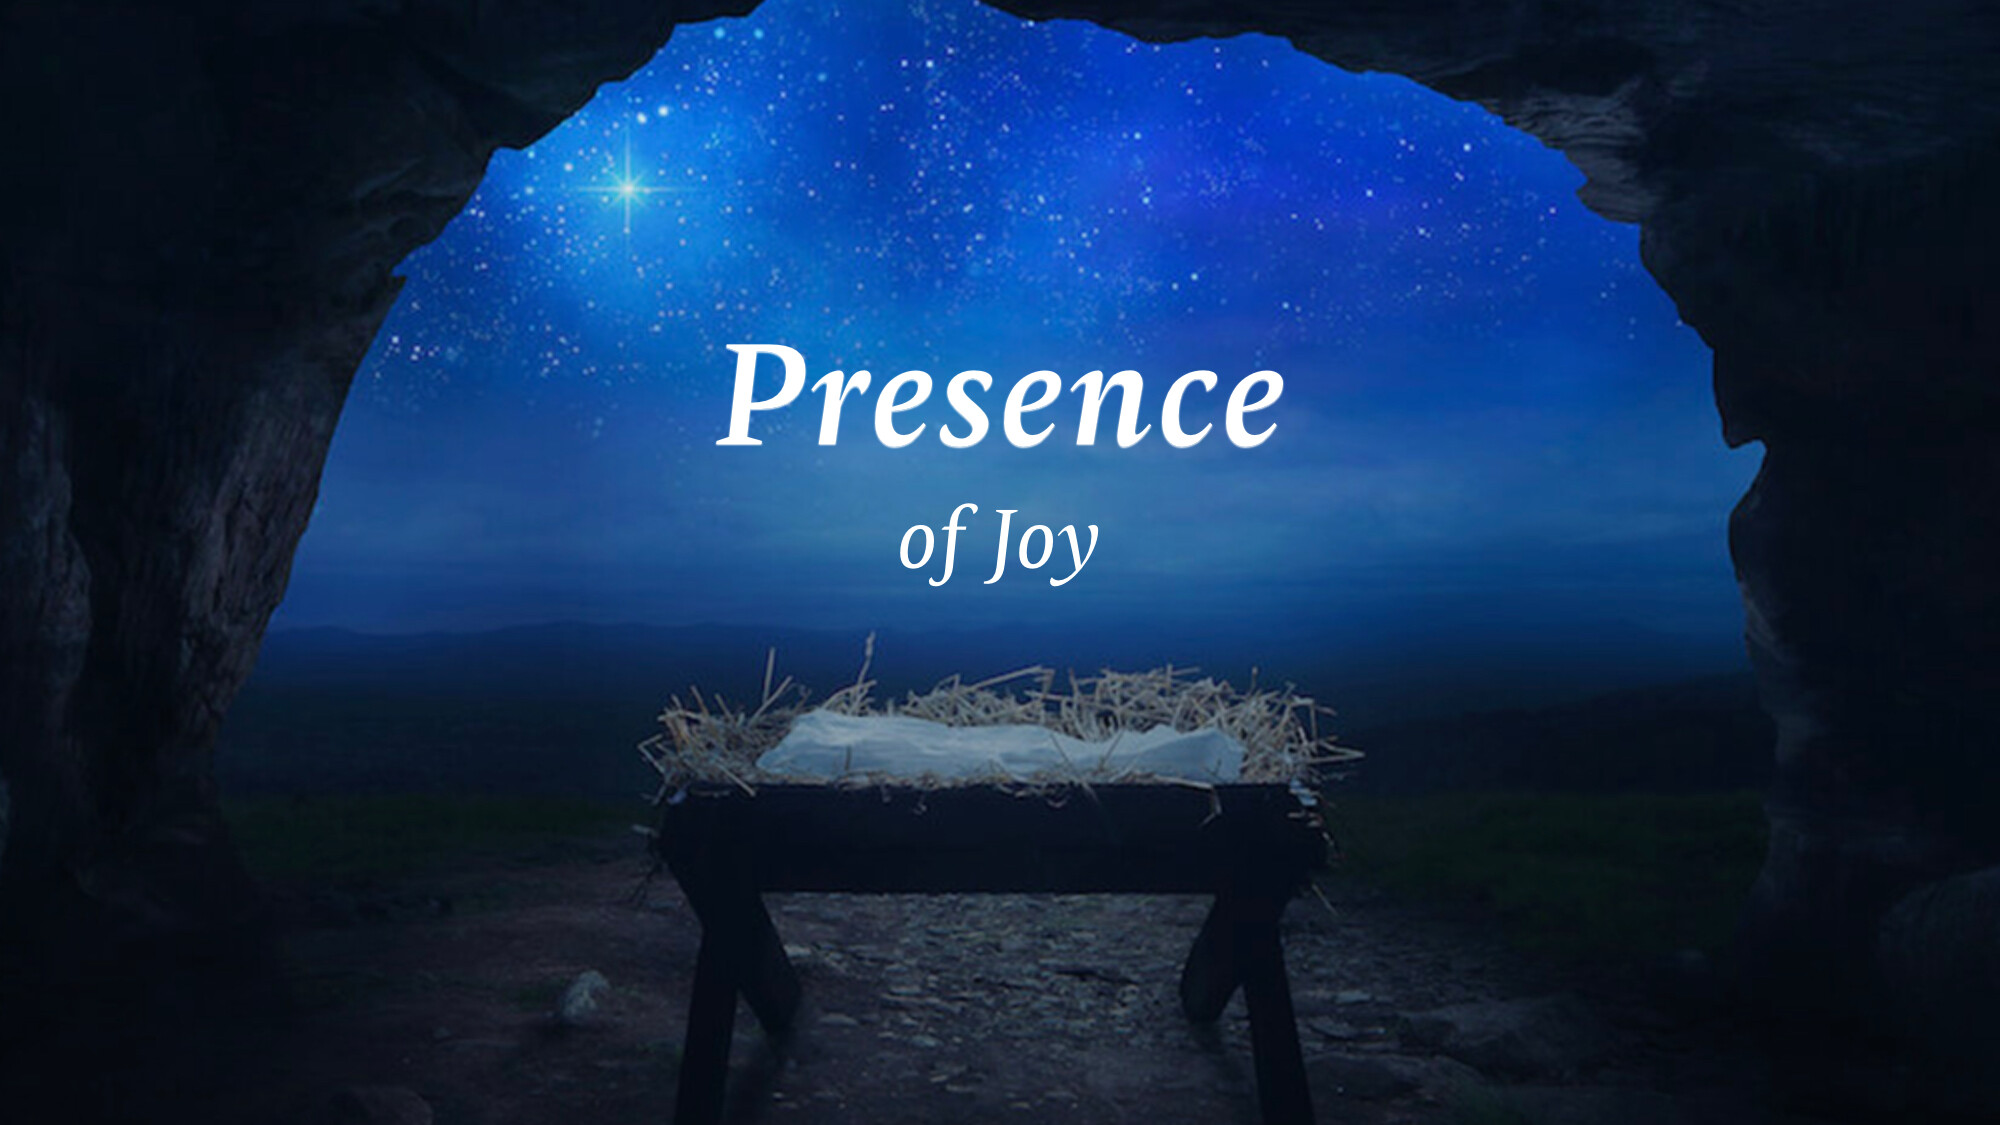 The Presence of Joy